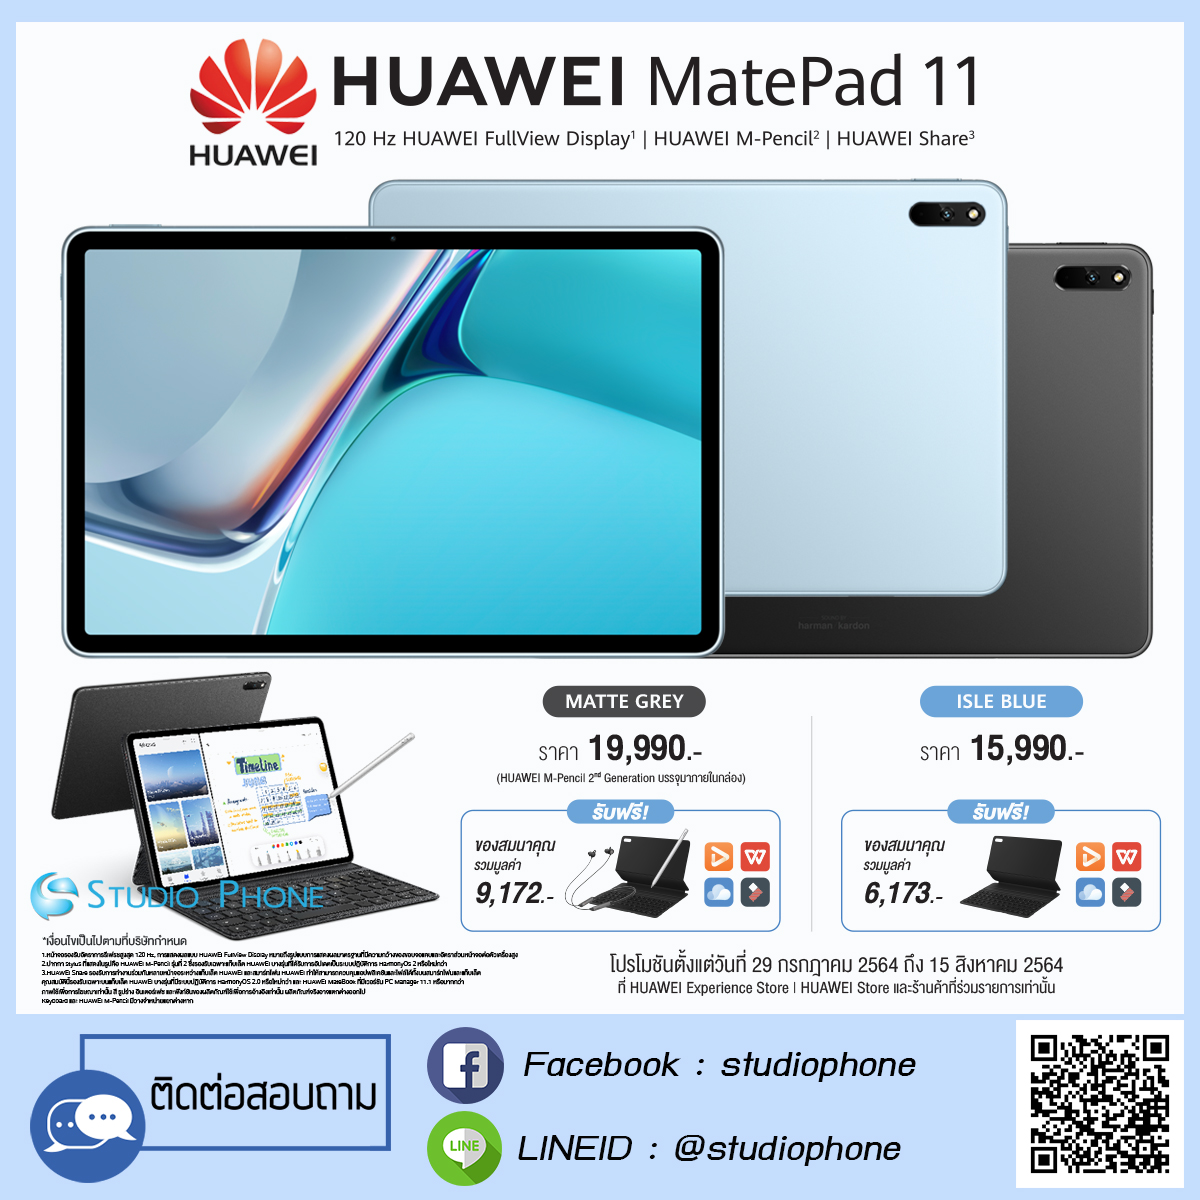 HUAWEI MatePad 11 (Wifi6)  Ram6GB / Rom128GB   สี Matte Grey แถม ปากกา(อยู่ในกล่อง) + เคสคีย์บอร์ด + Freelace pro / สี Isle Blue  แถม เคสคีย์บอร์ด